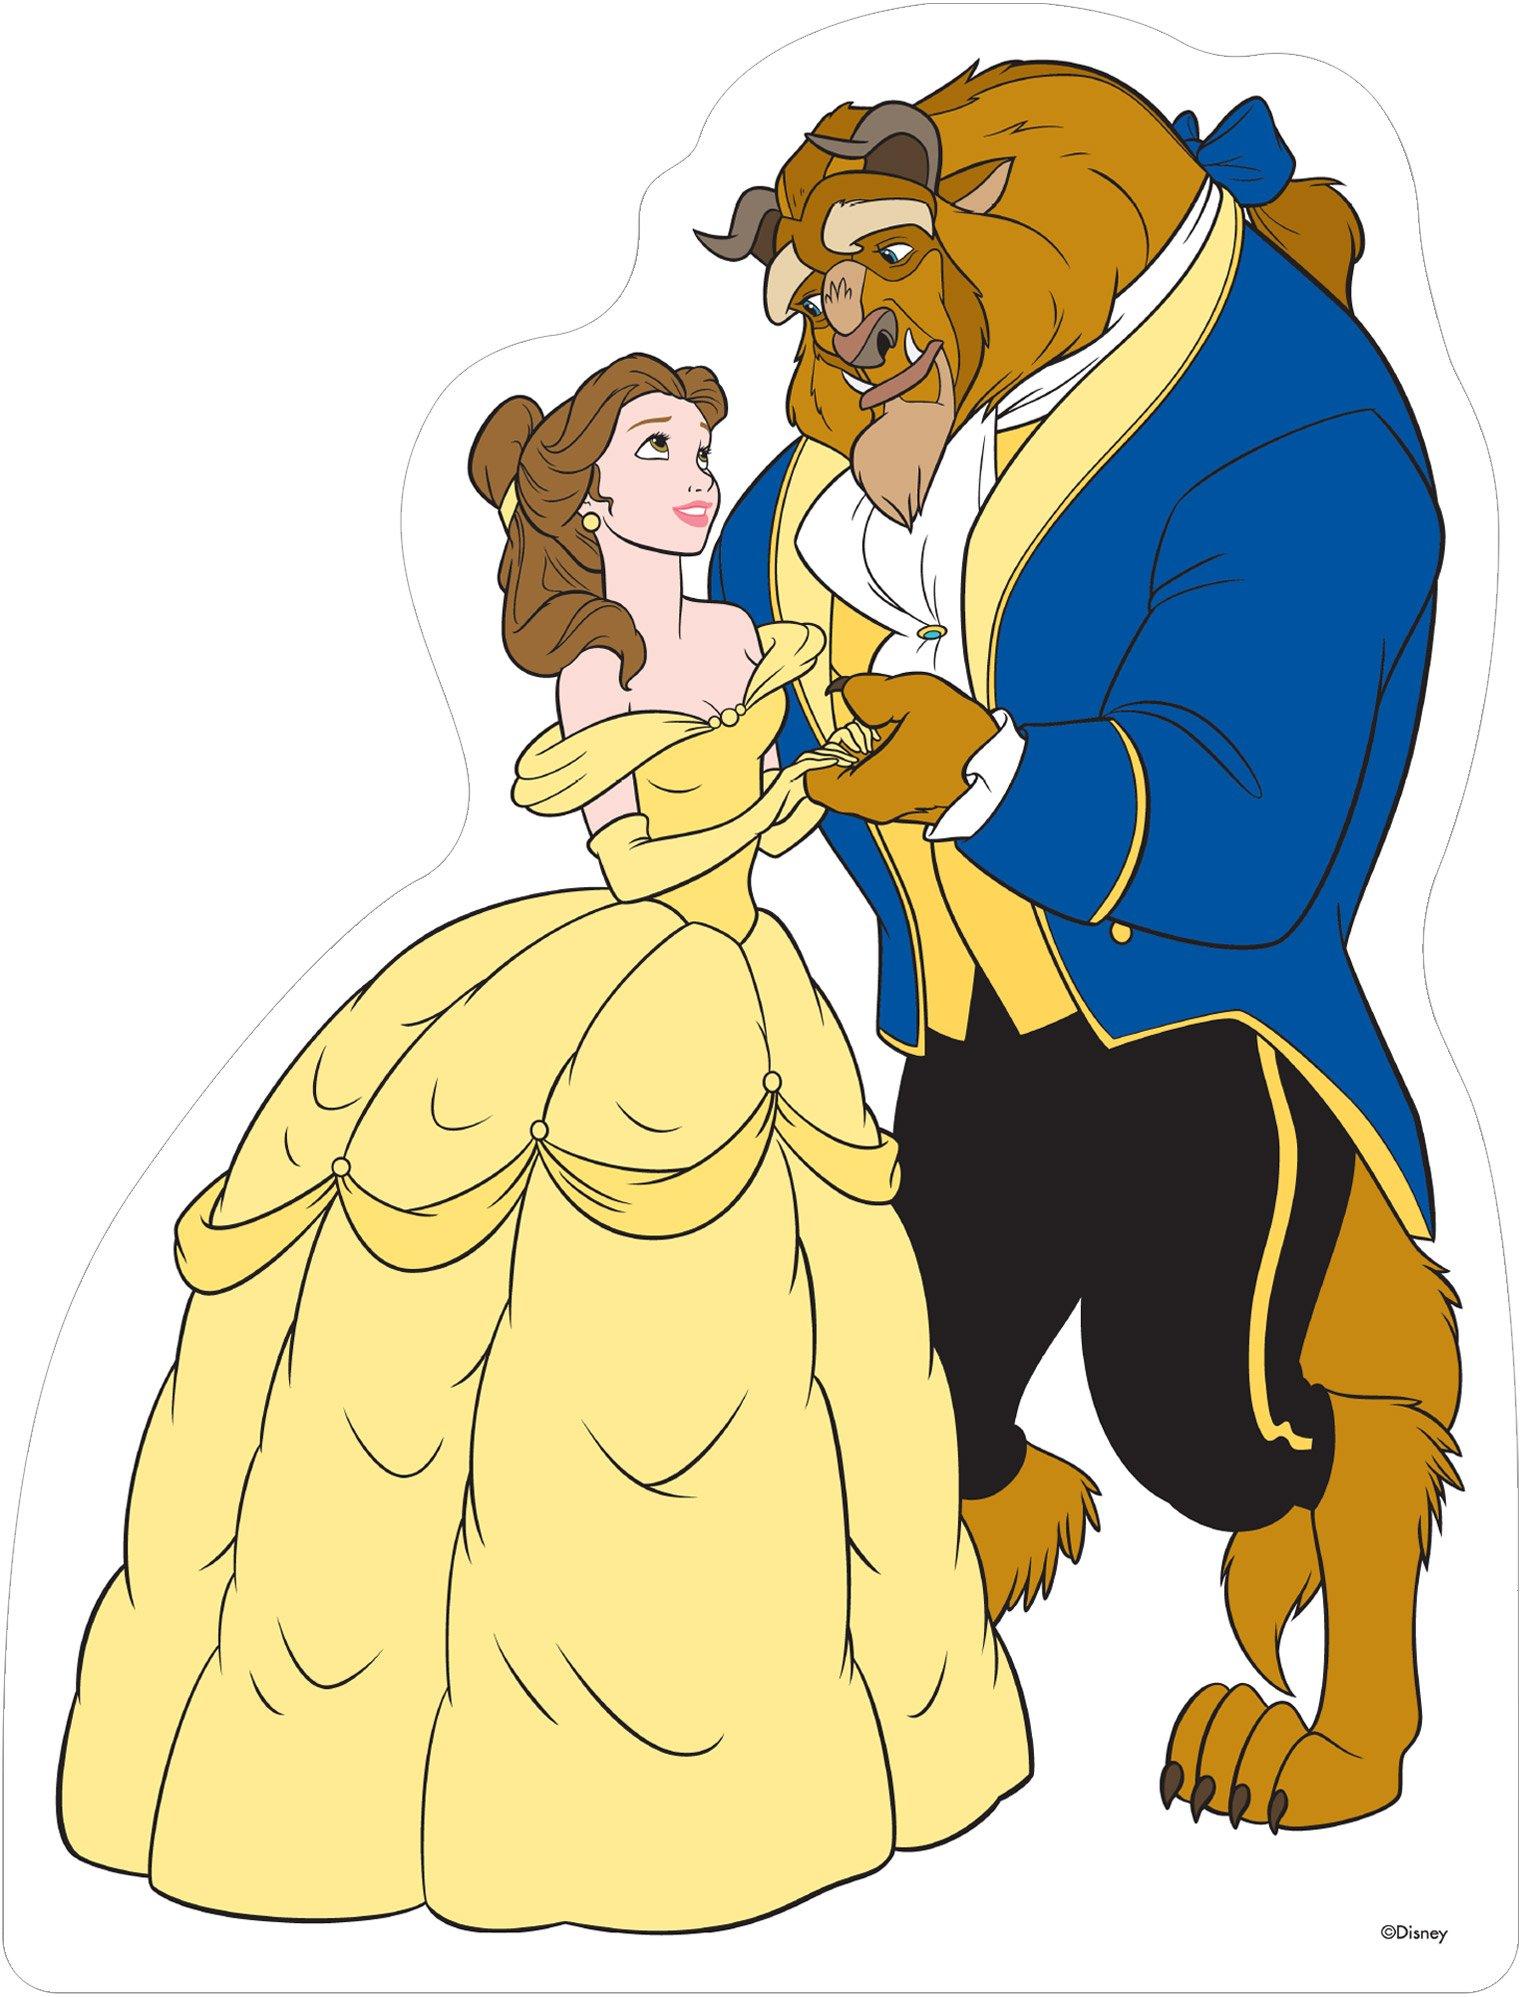 Belle & Beast Life-Size Cardboard Cutout - Disney Beauty and the Beast